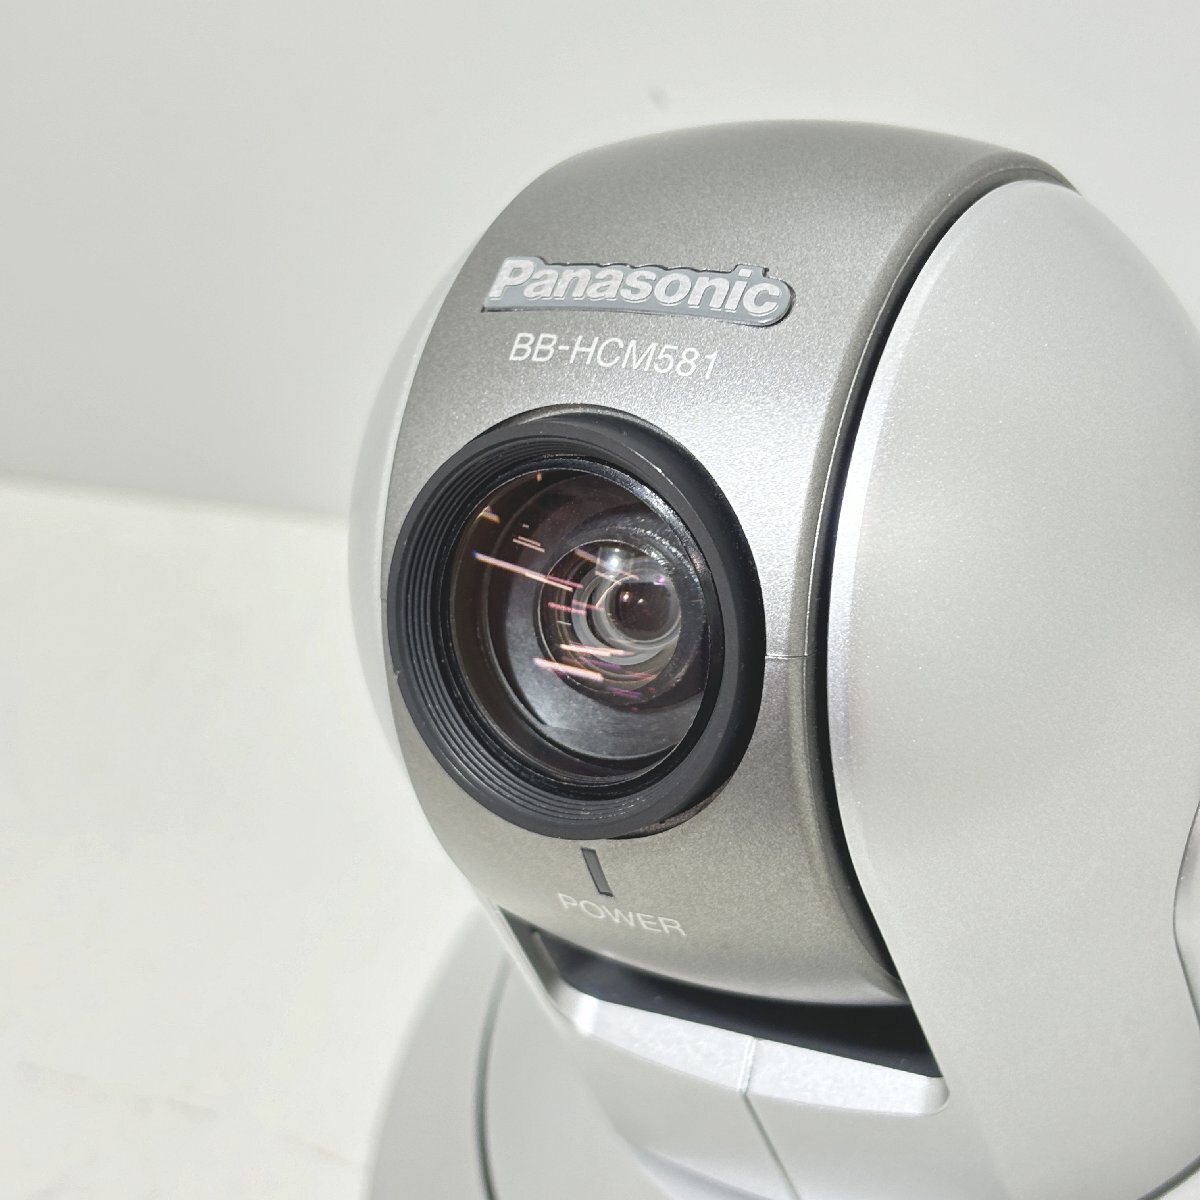 Panasonic network camera BB-HCM581 Panasonic security camera 0406260